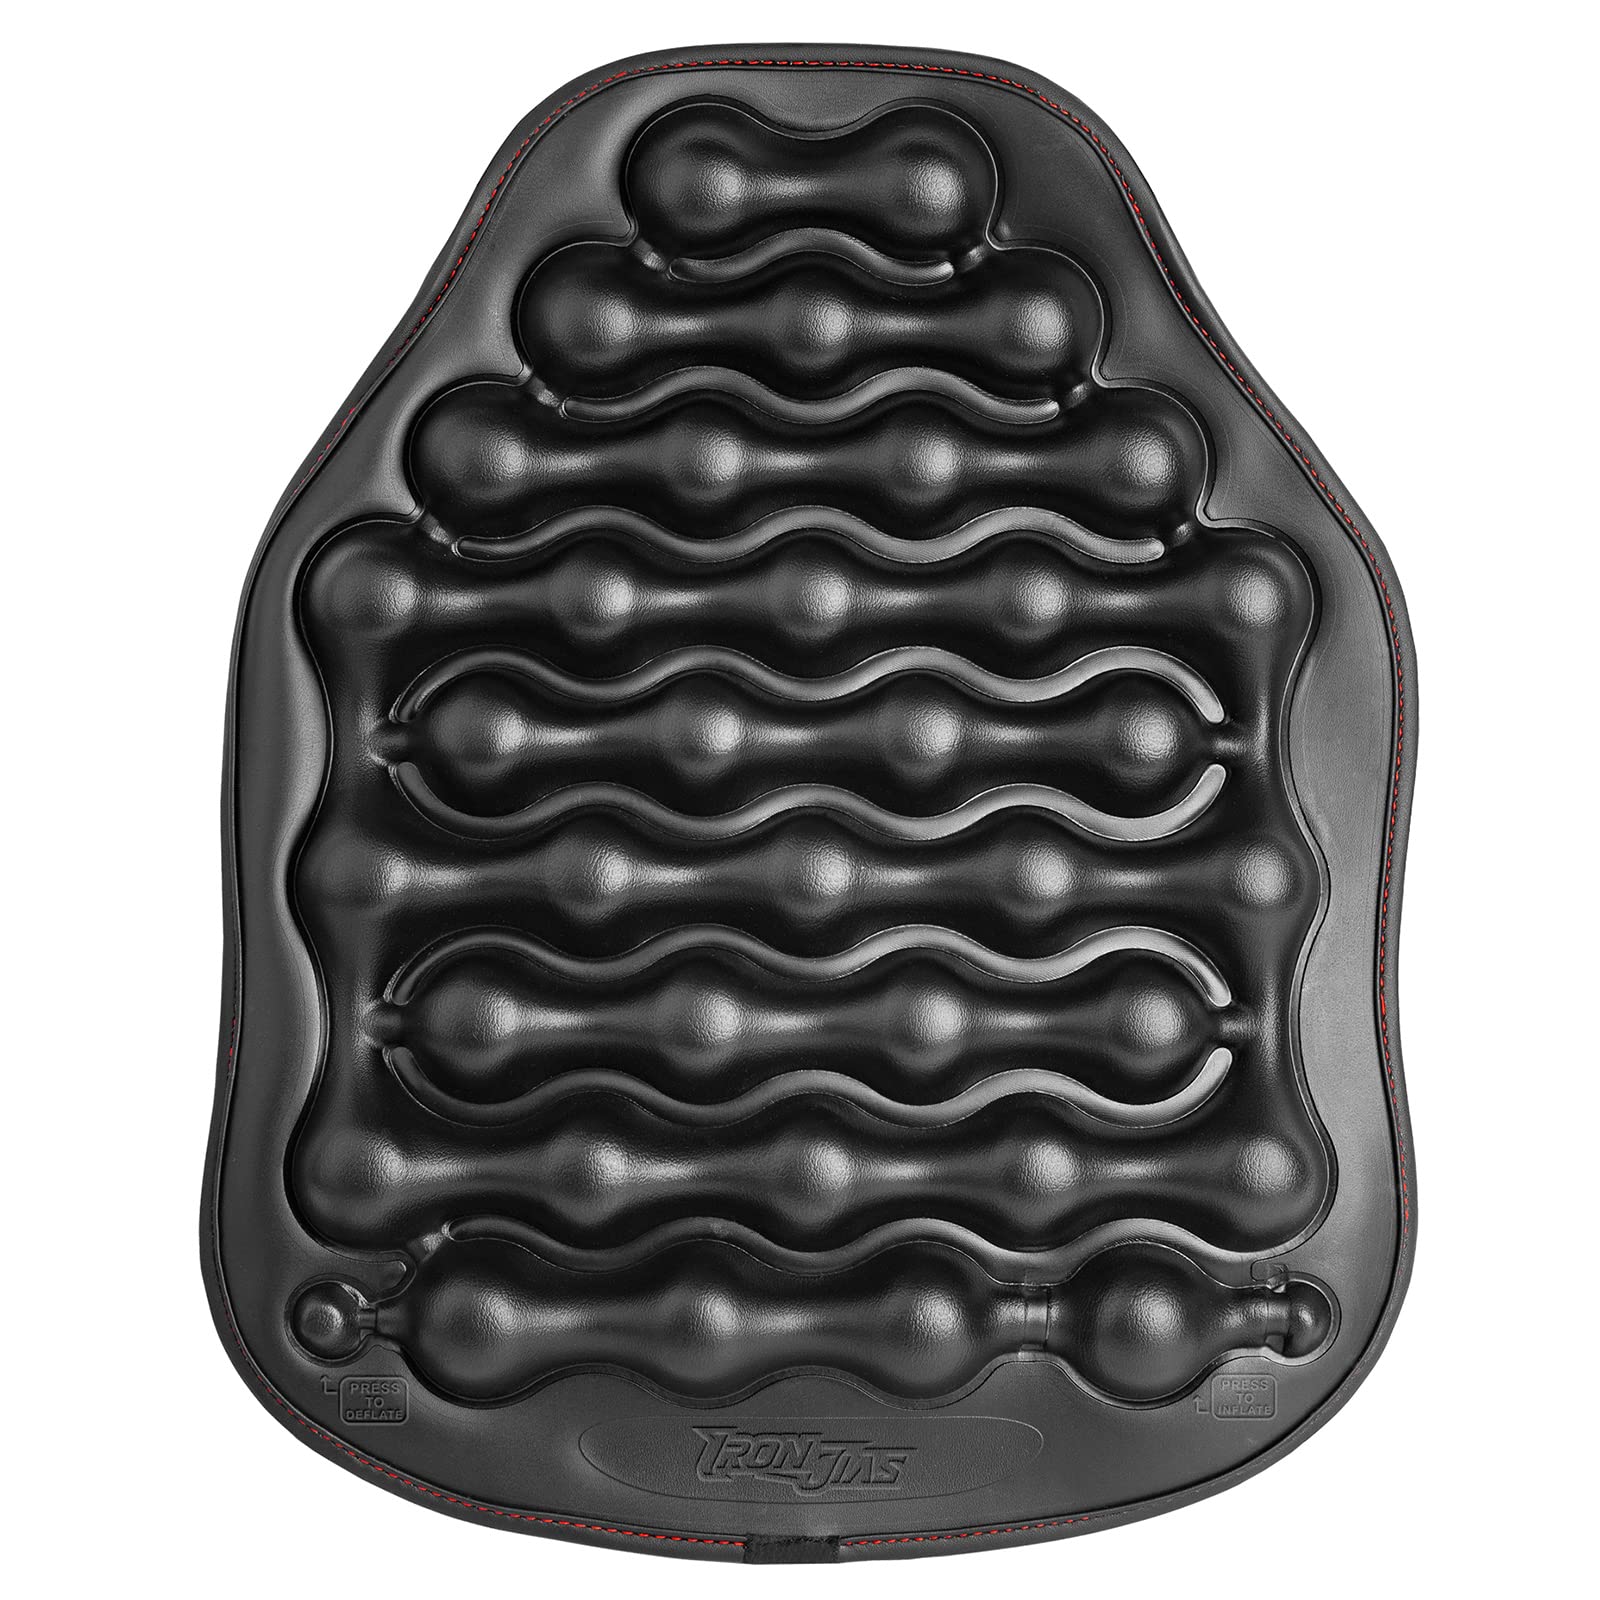 IRONJIAS PU Waterproof Shock-absorbing Motorcycle Seat Cushion